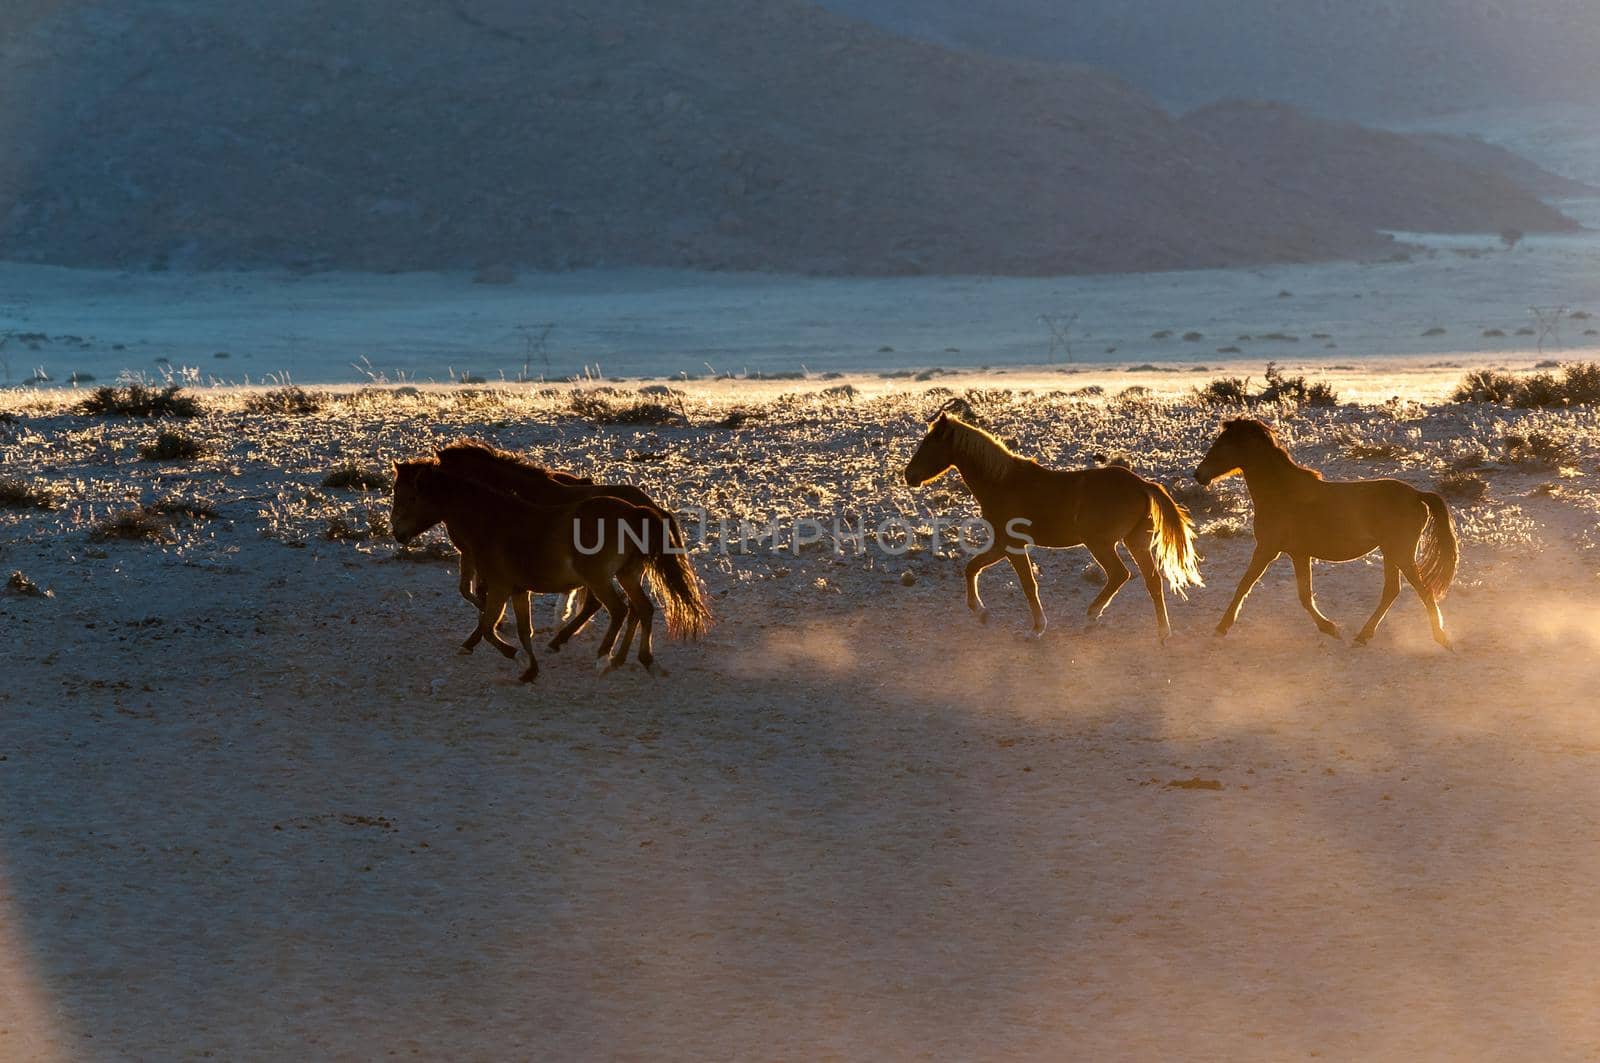 Wild horses of the Namib running at sunrise by dpreezg